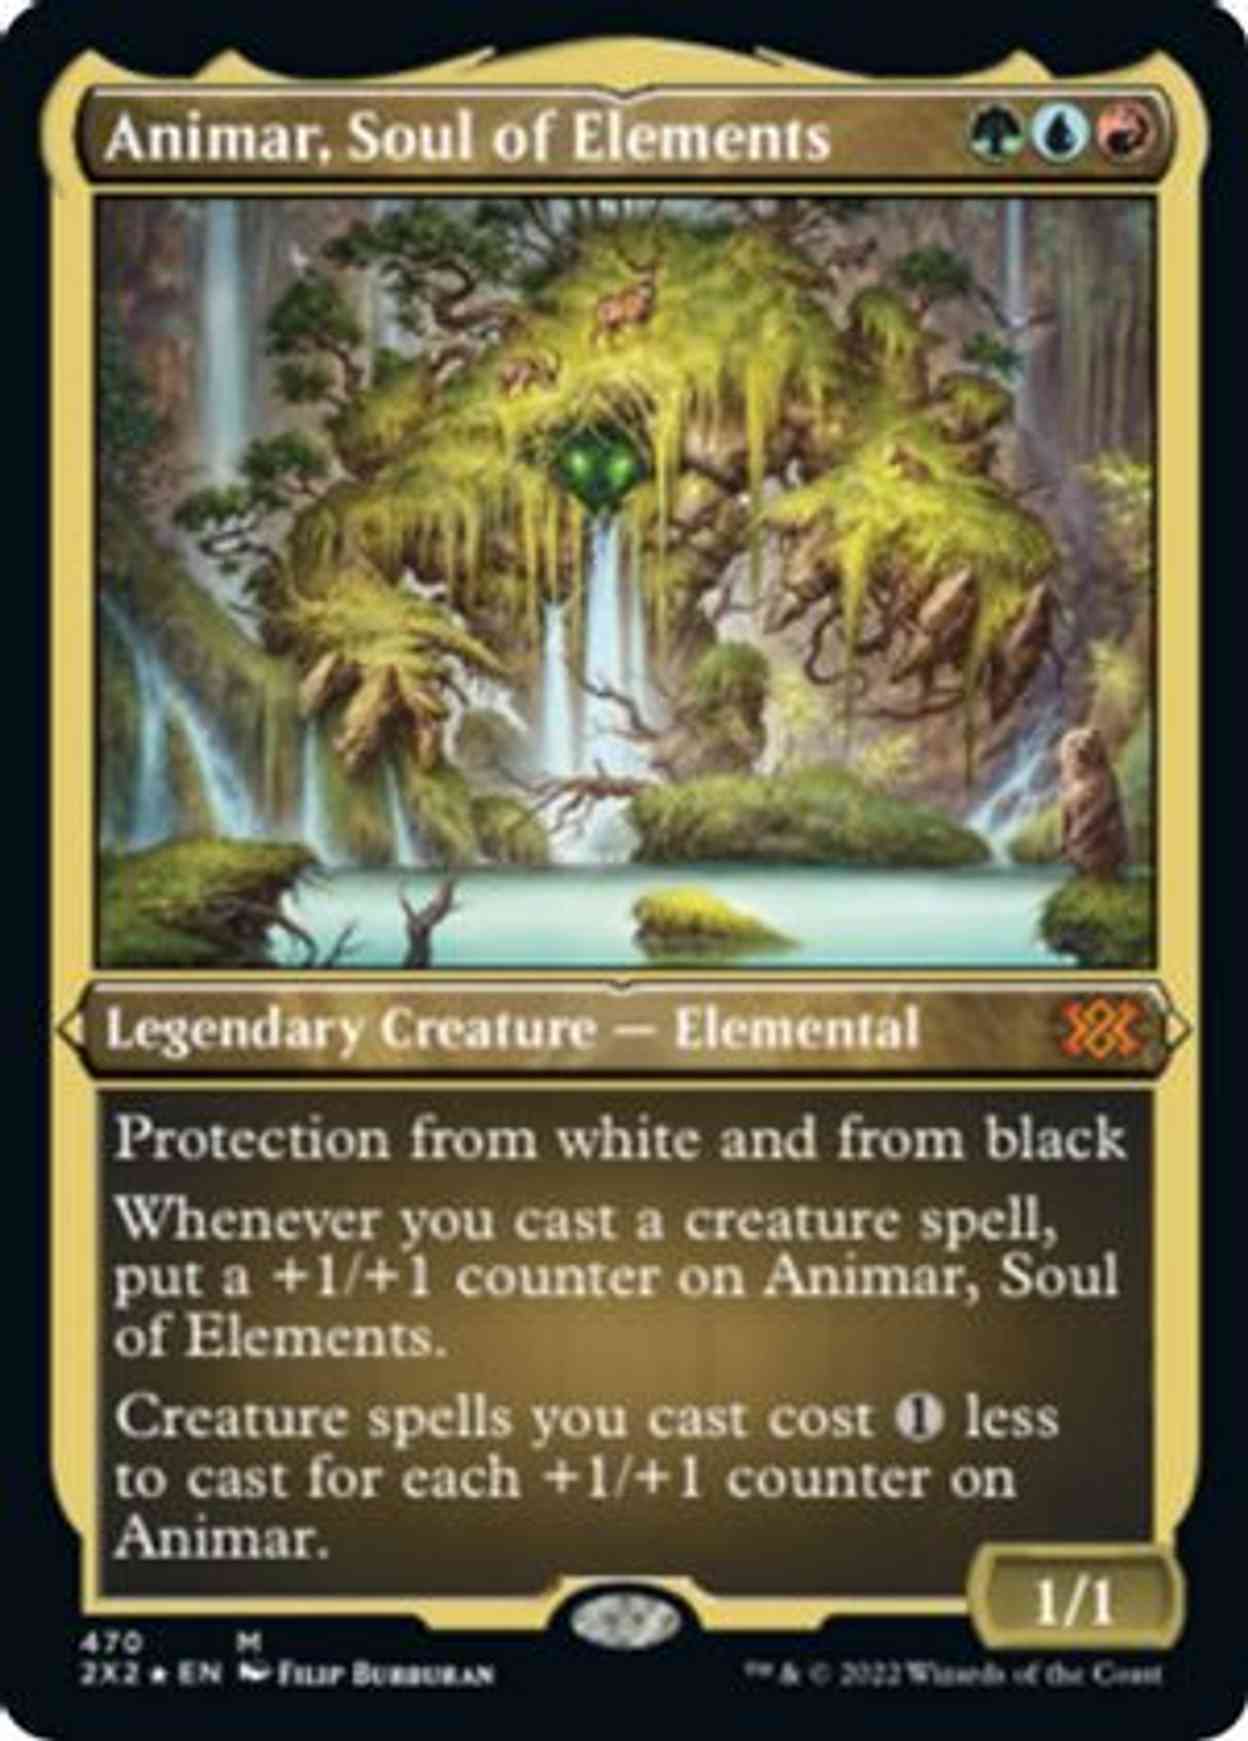 Animar, Soul of Elements (Foil Etched) magic card front